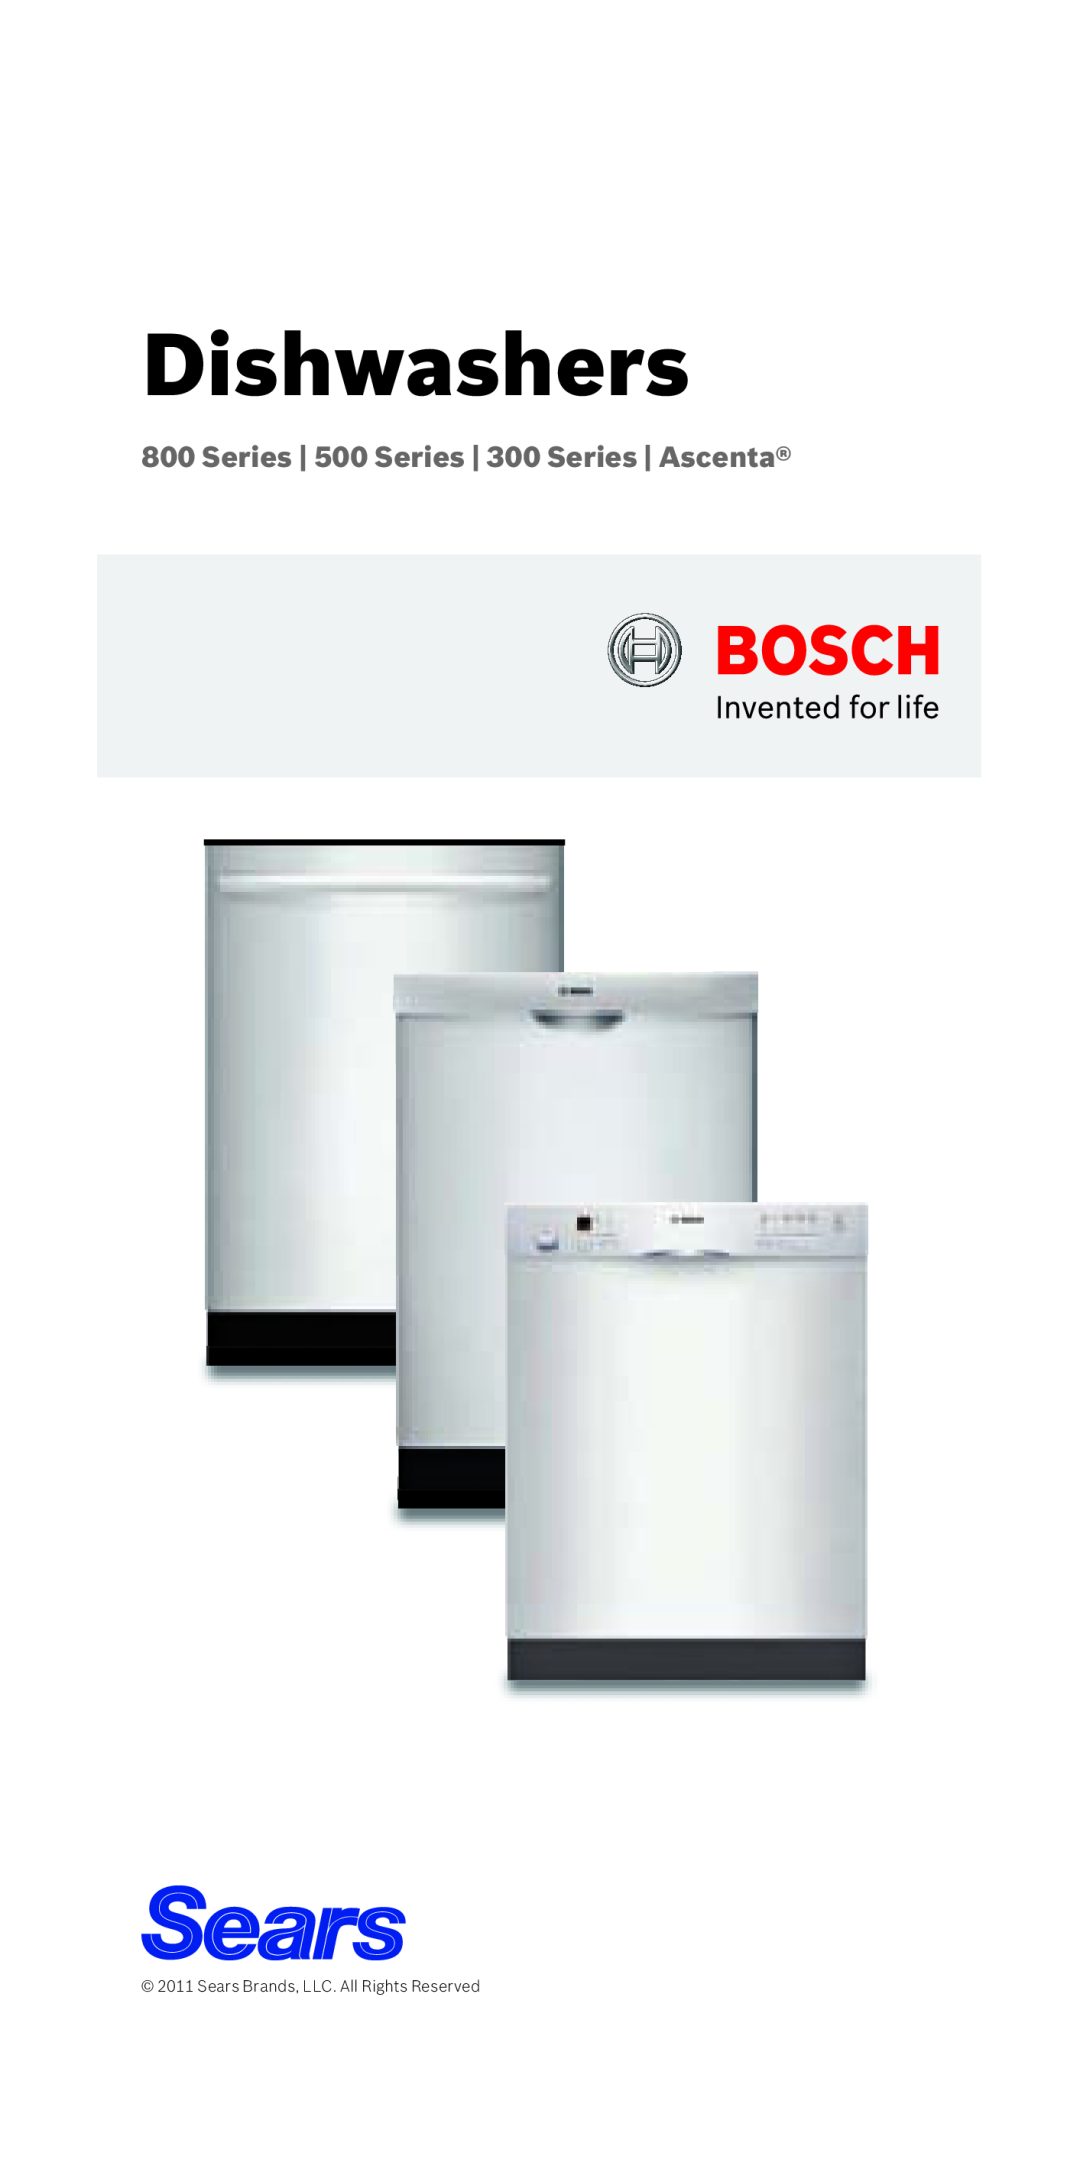 Bosch Appliances 800 Series manual Dishwashers, Series 500 Series 300 Series Ascenta 